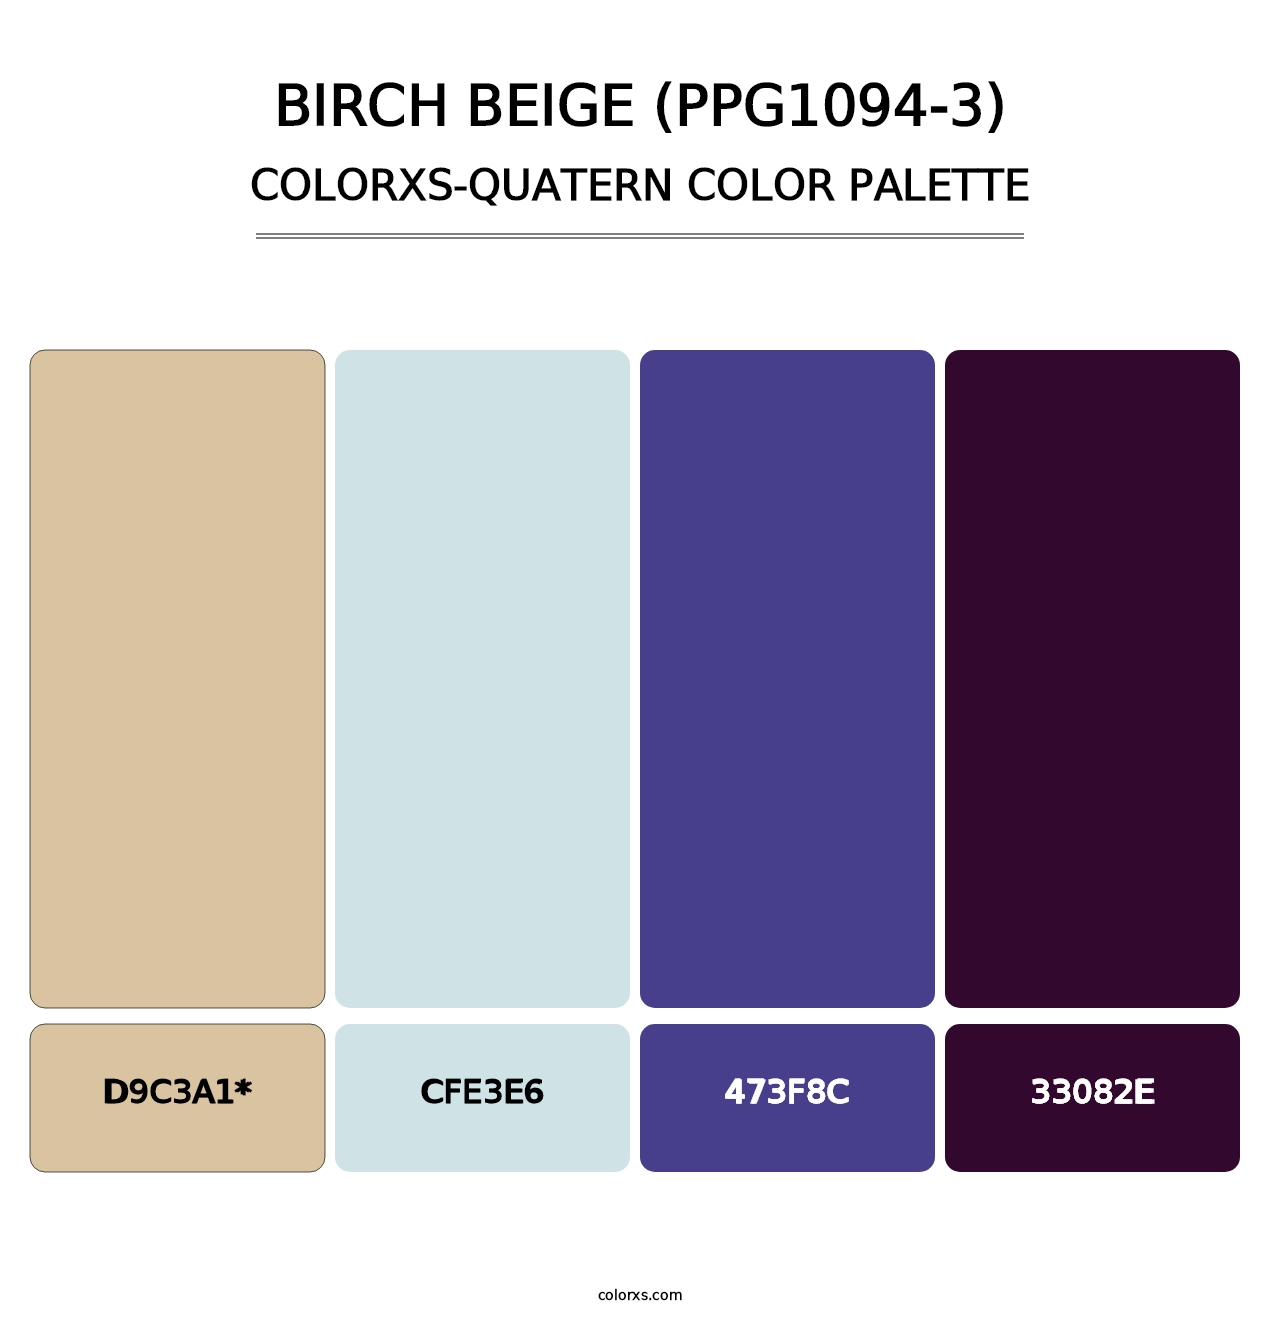 Birch Beige (PPG1094-3) - Colorxs Quatern Palette